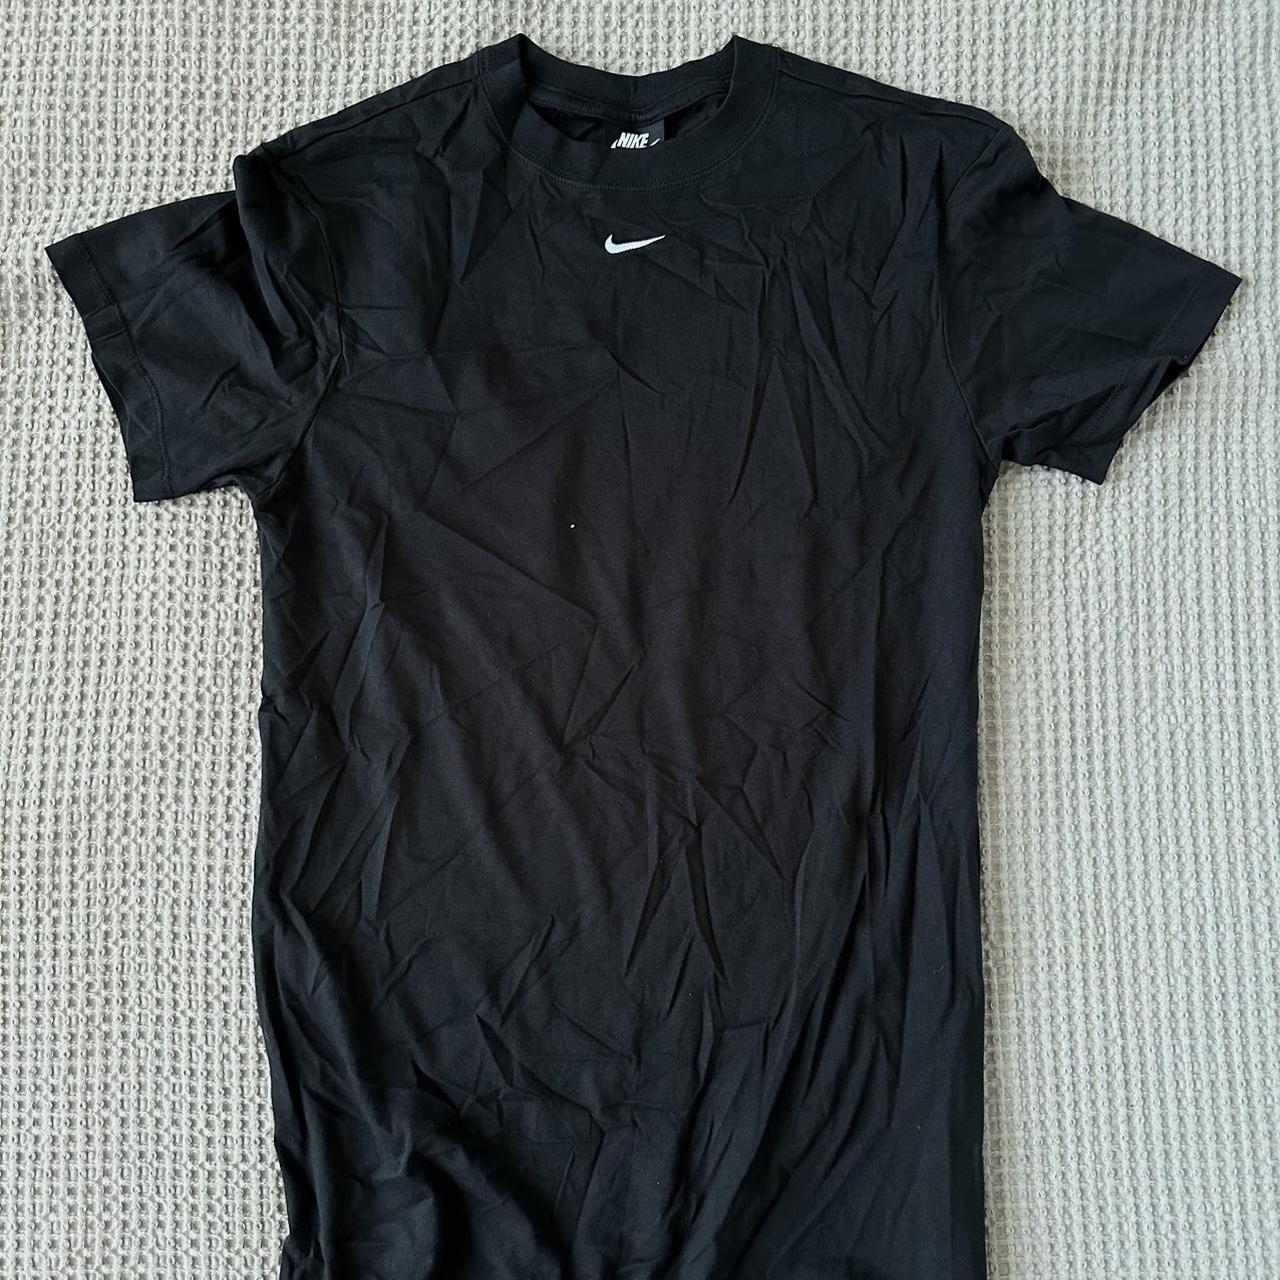 Nike Single Swoosh Shirt/Dress. Effectively an... - Depop